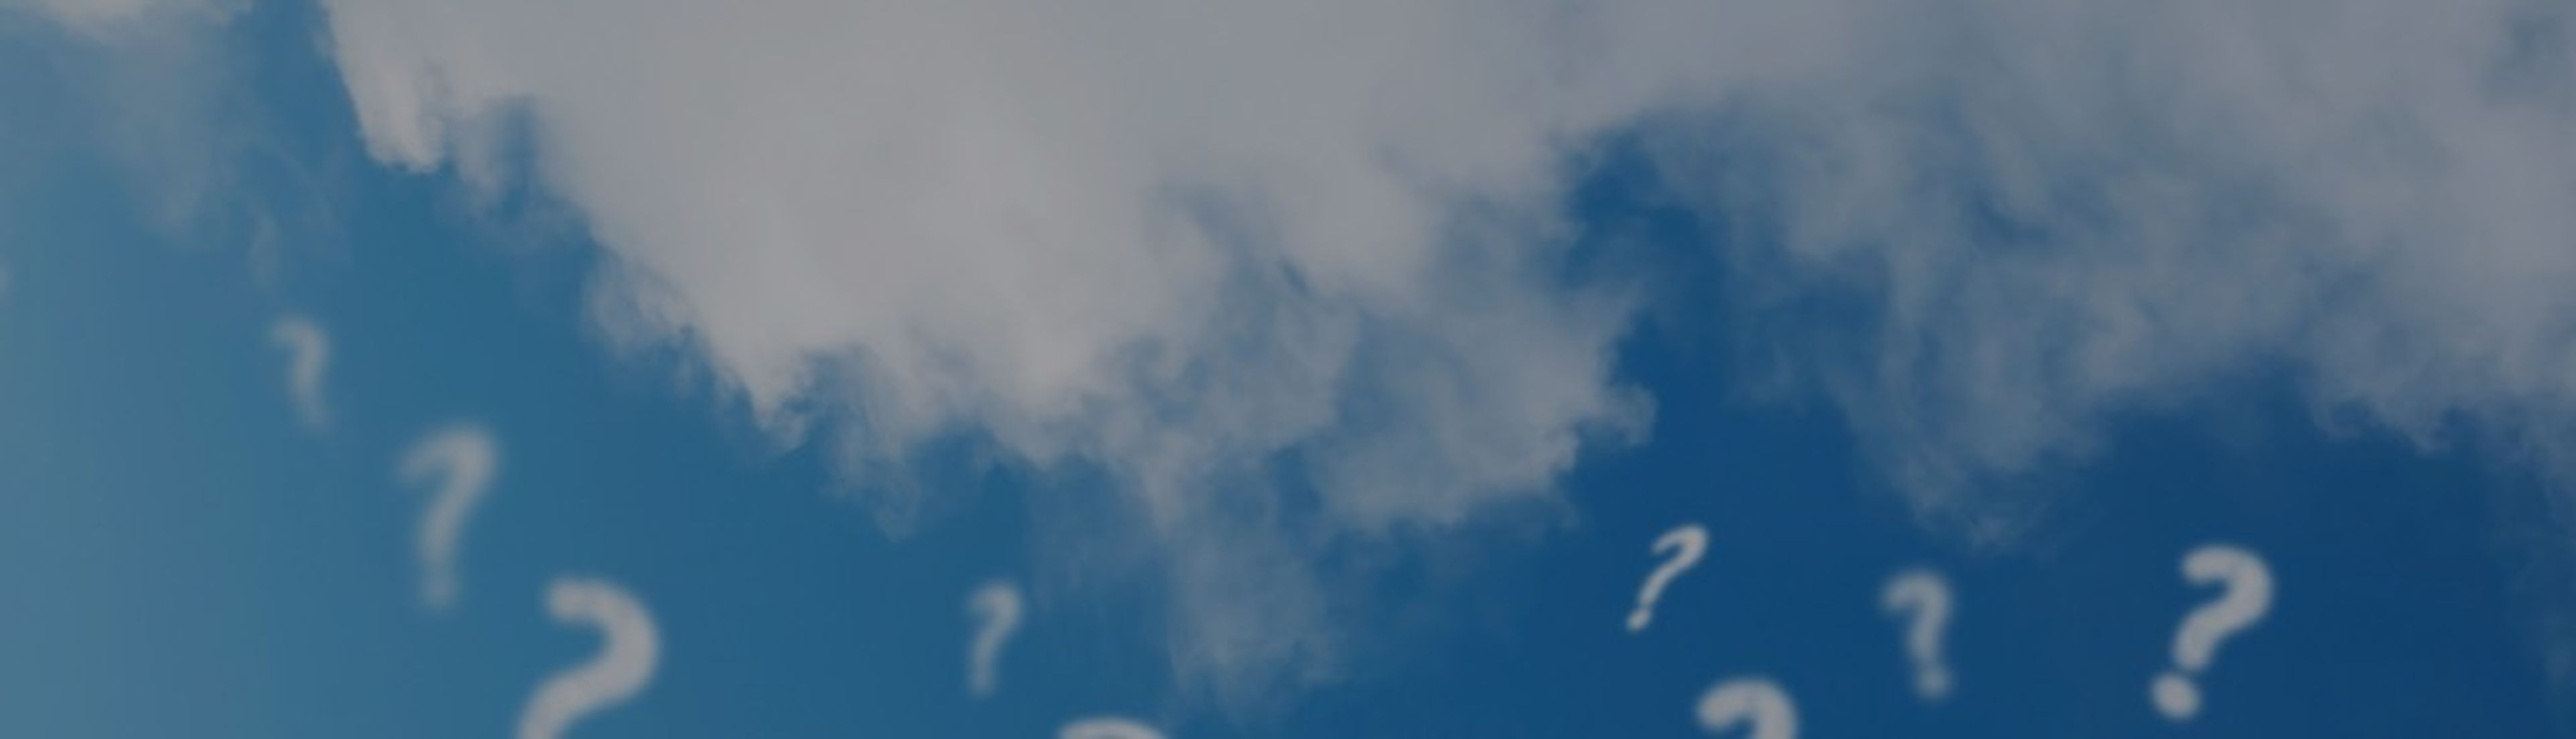 Question mark cloud on blue sky